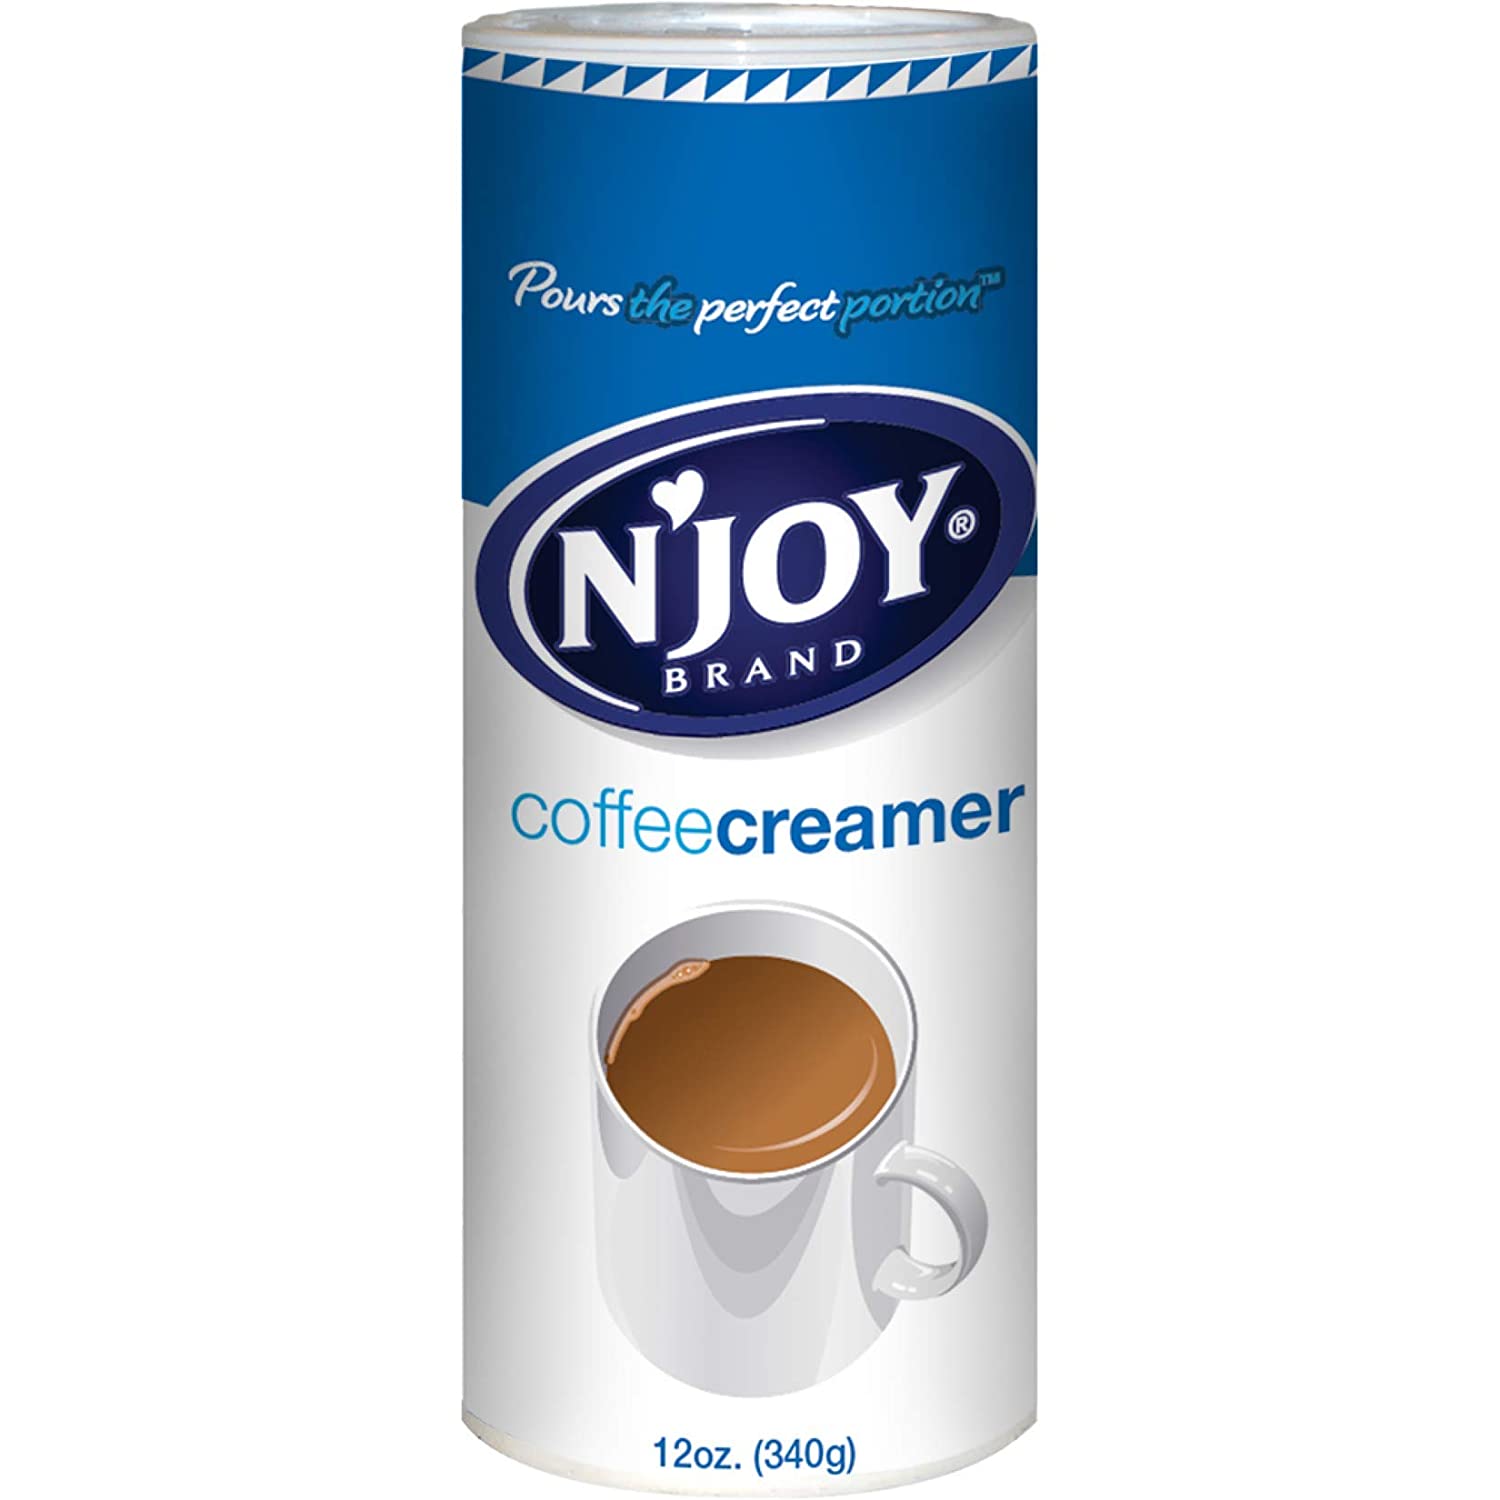 Coffee Creamer Substitute For Milk / Coffee Creamer Alternatives Buyers ...